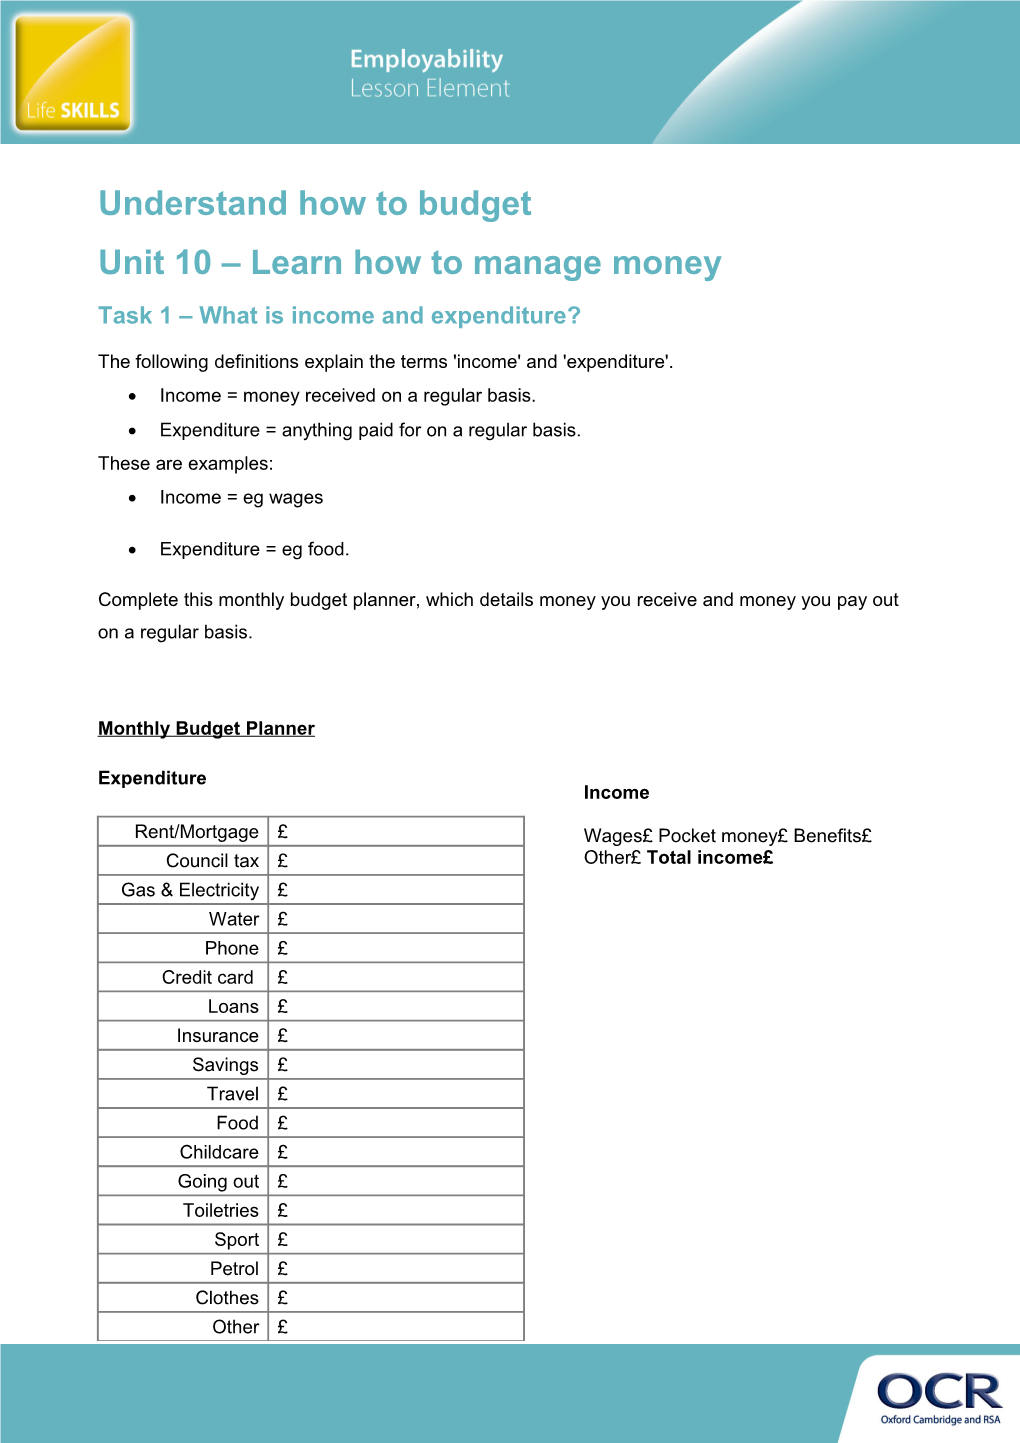 Cambridge Employability - Unit 10 - Understand How to Budget